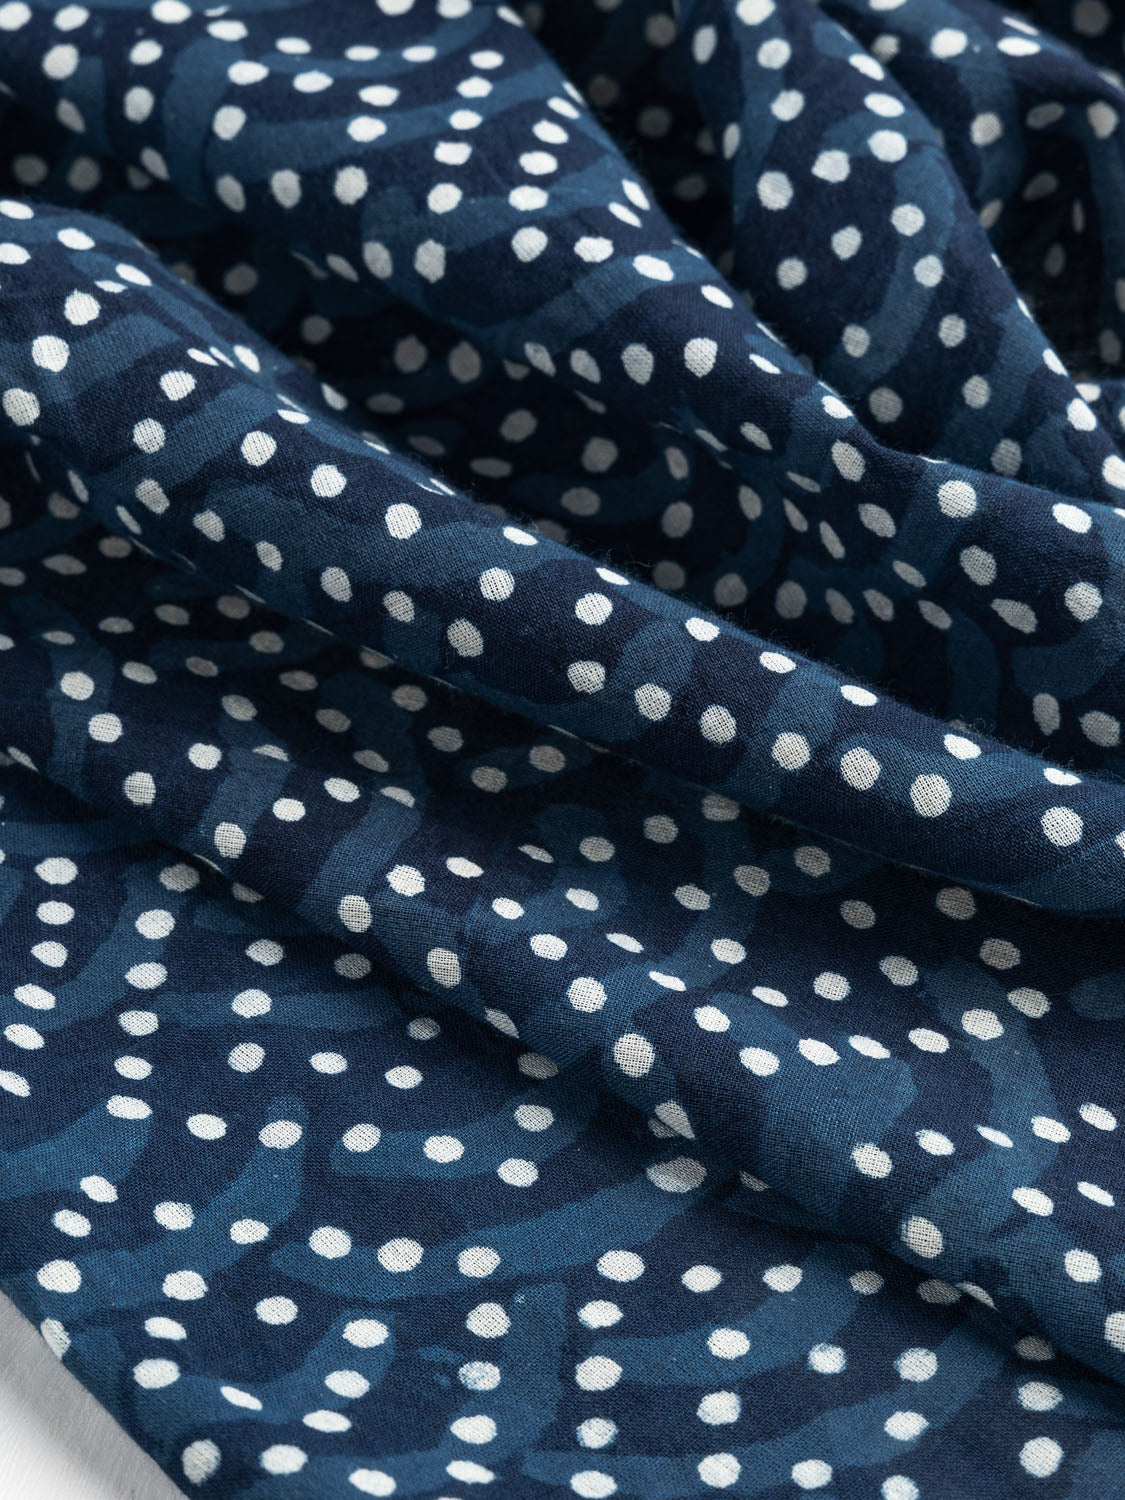 Handloomed Indigo Dyed Cotton Dot and Wave Print - Indigo + Cream | Core Fabrics